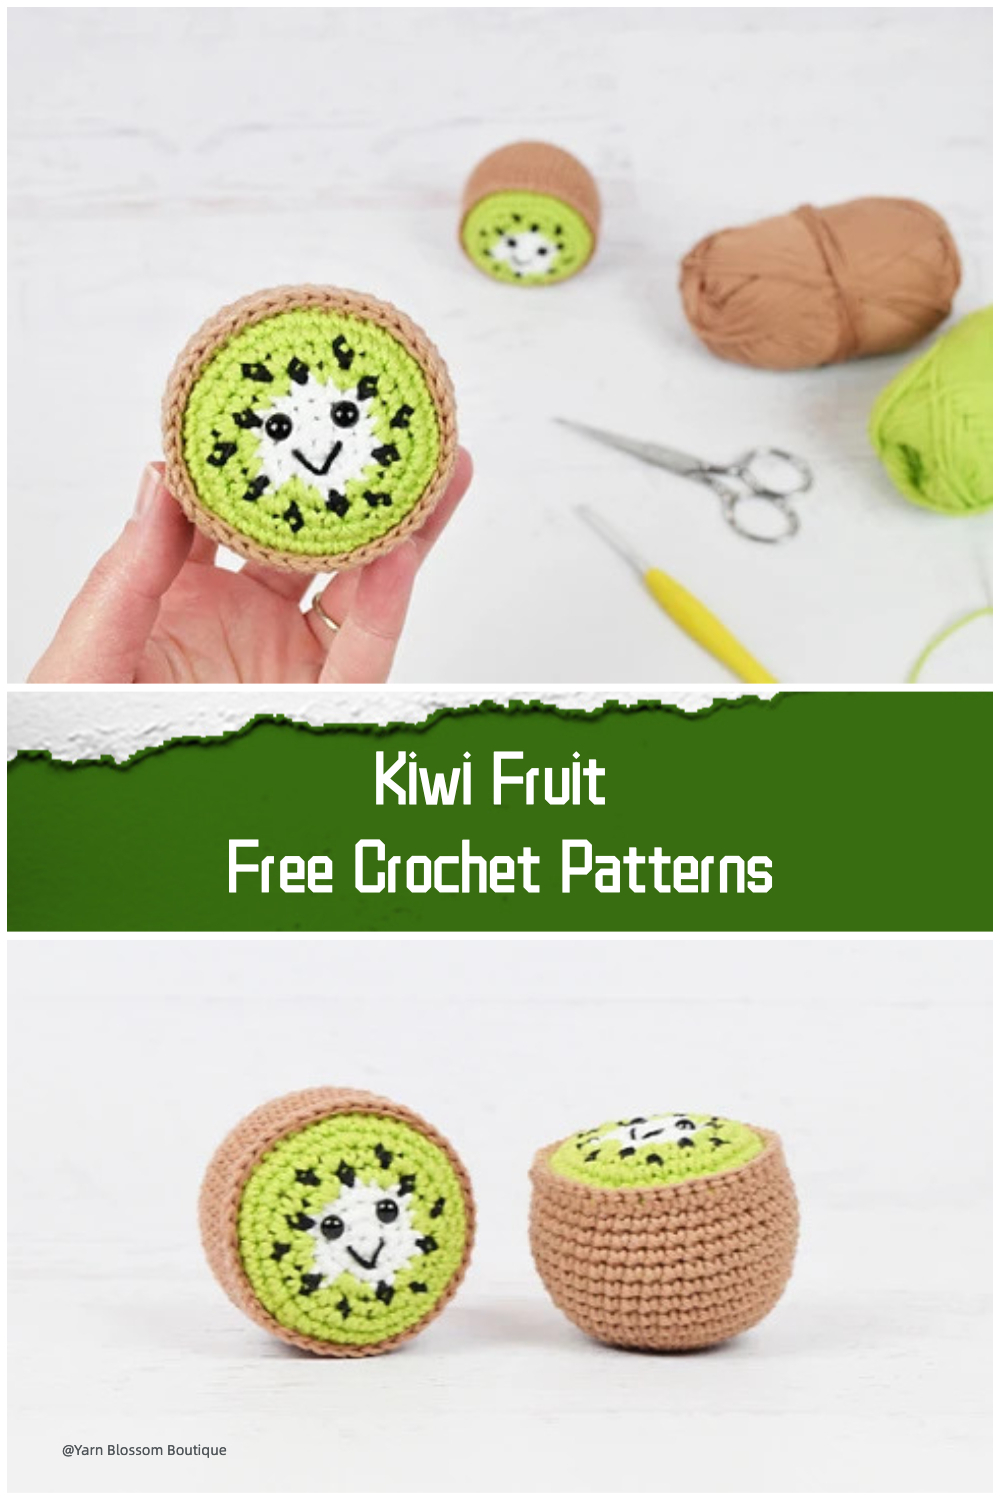 Kiwi Fruit Free Crochet Patterns